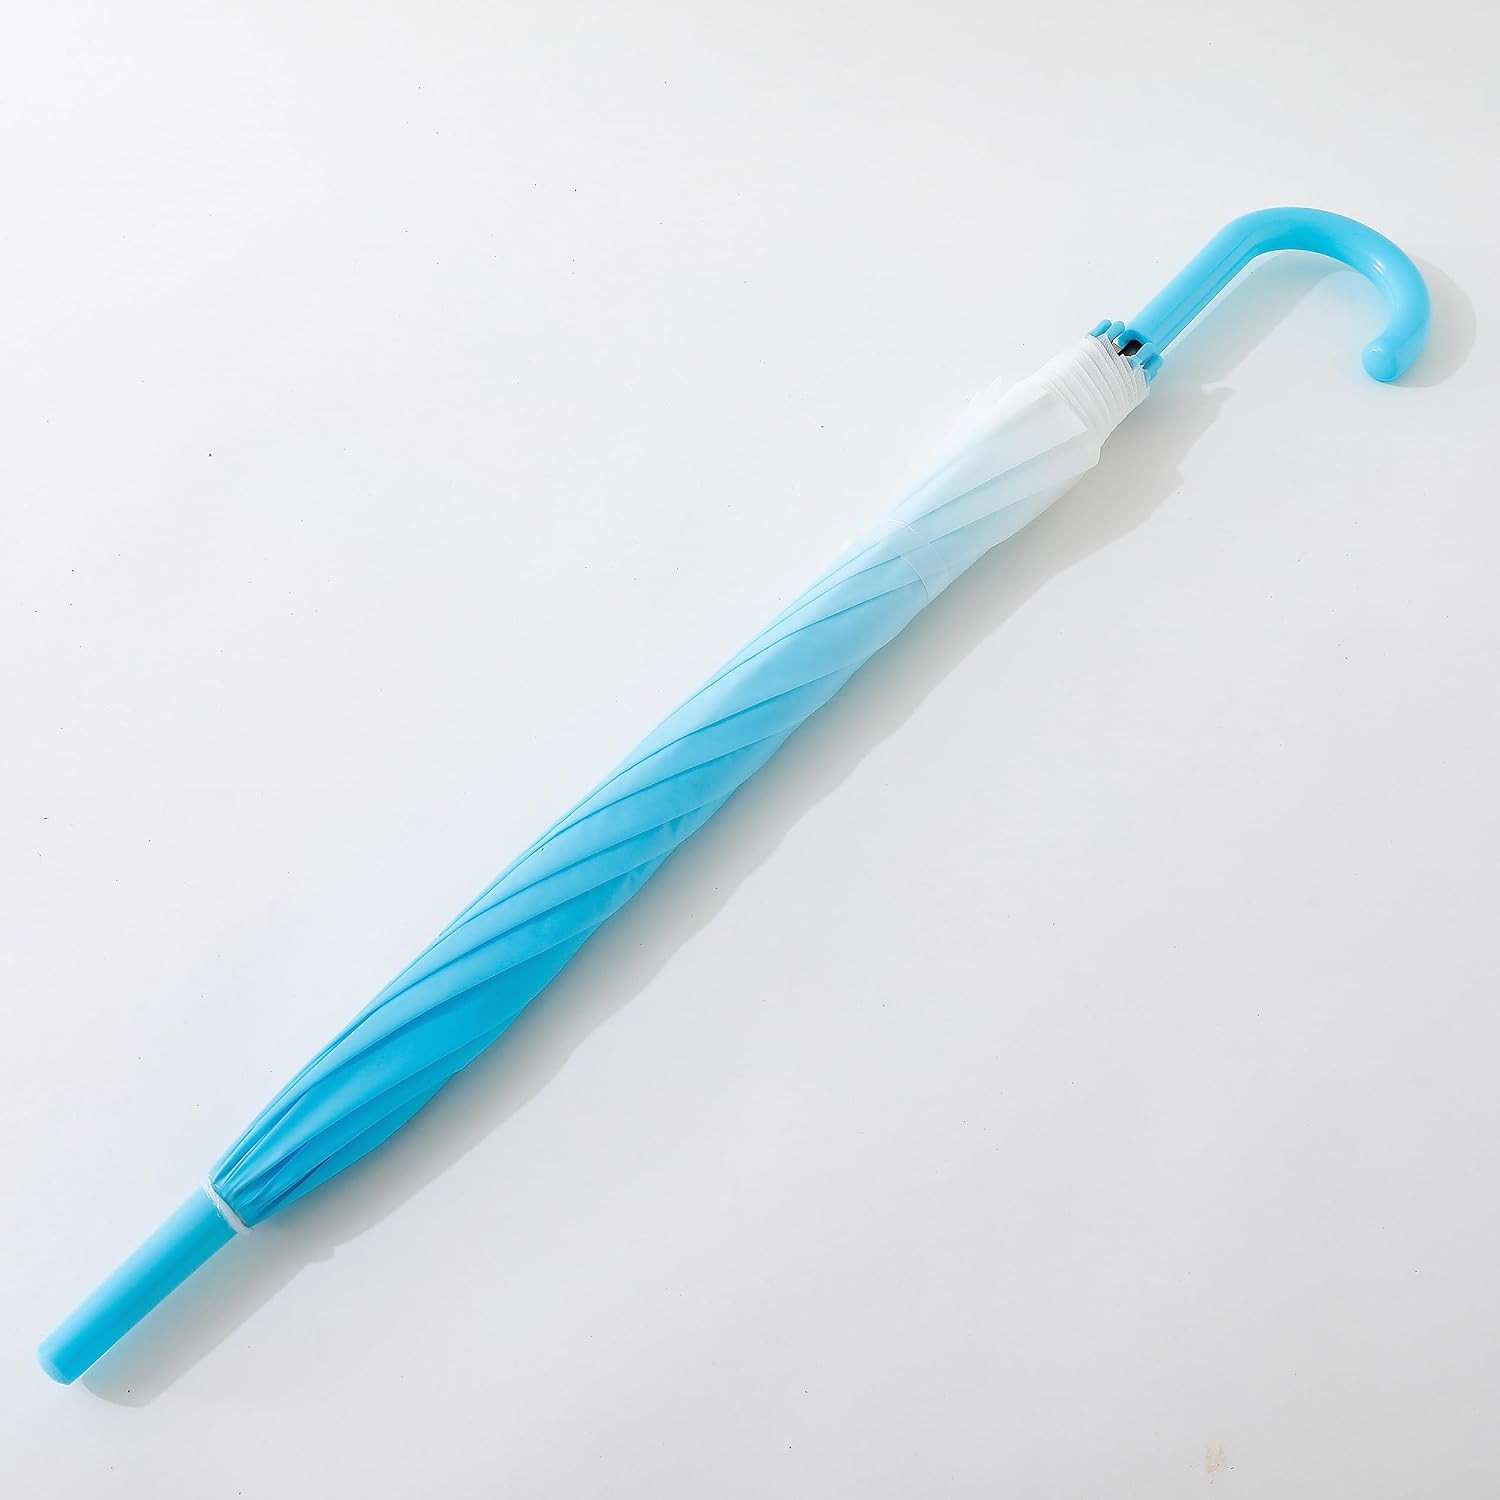 Kuber Industries Transparent Umbrella For Men & Women|Automatic Umbrella For Rain (Blue)